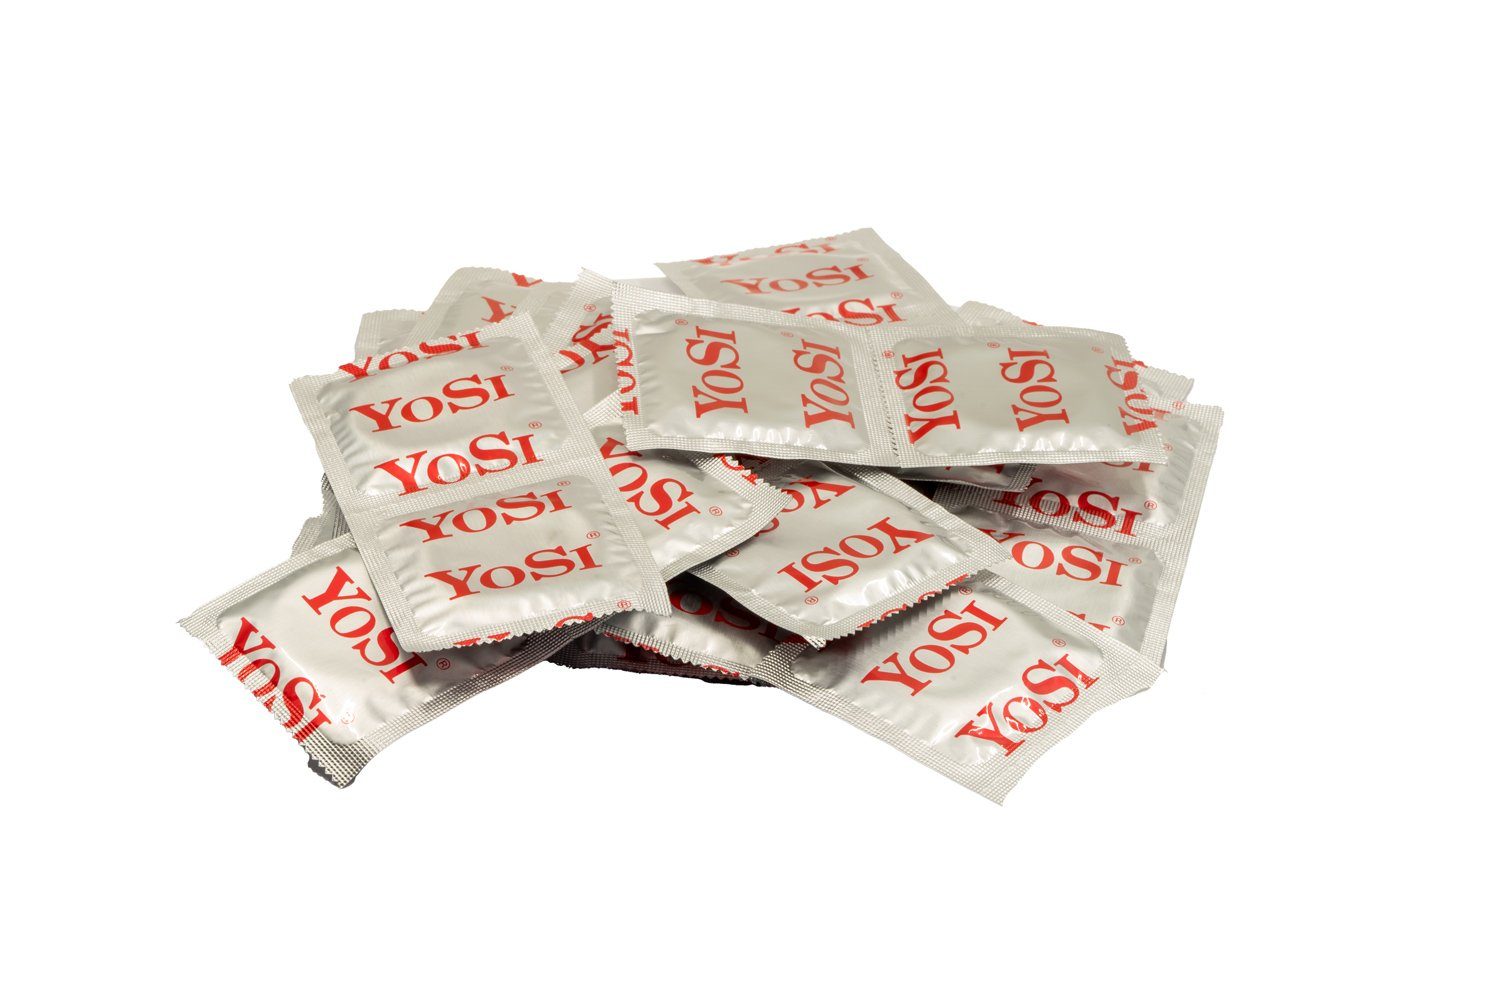 YOSI Kondome 50er Mixed, 53mm, 10 je Stück: Traube & Ribbed, Banane, 5 Erdbeere Ultra Thin, Sorten